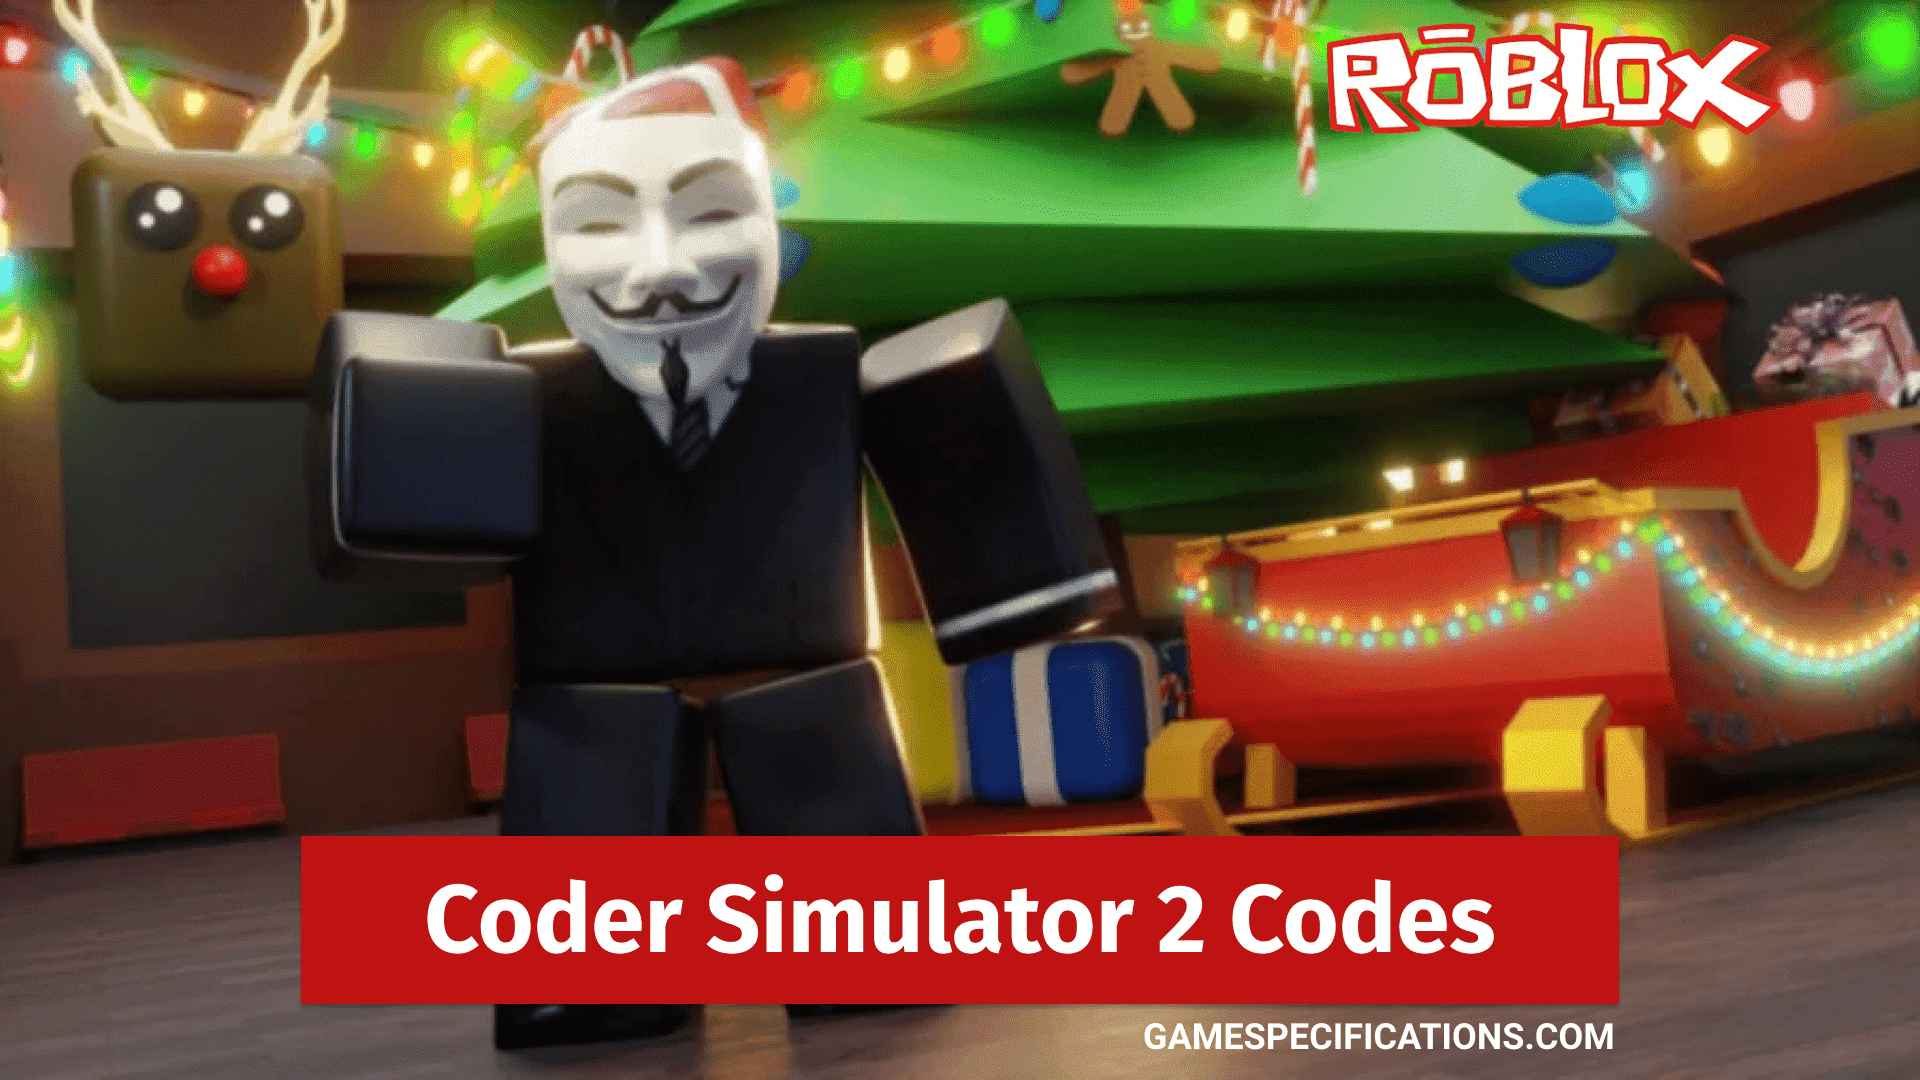 Roblox Coder Simulator 2 Codes July 2021 Game Specifications - fun roblox simulators